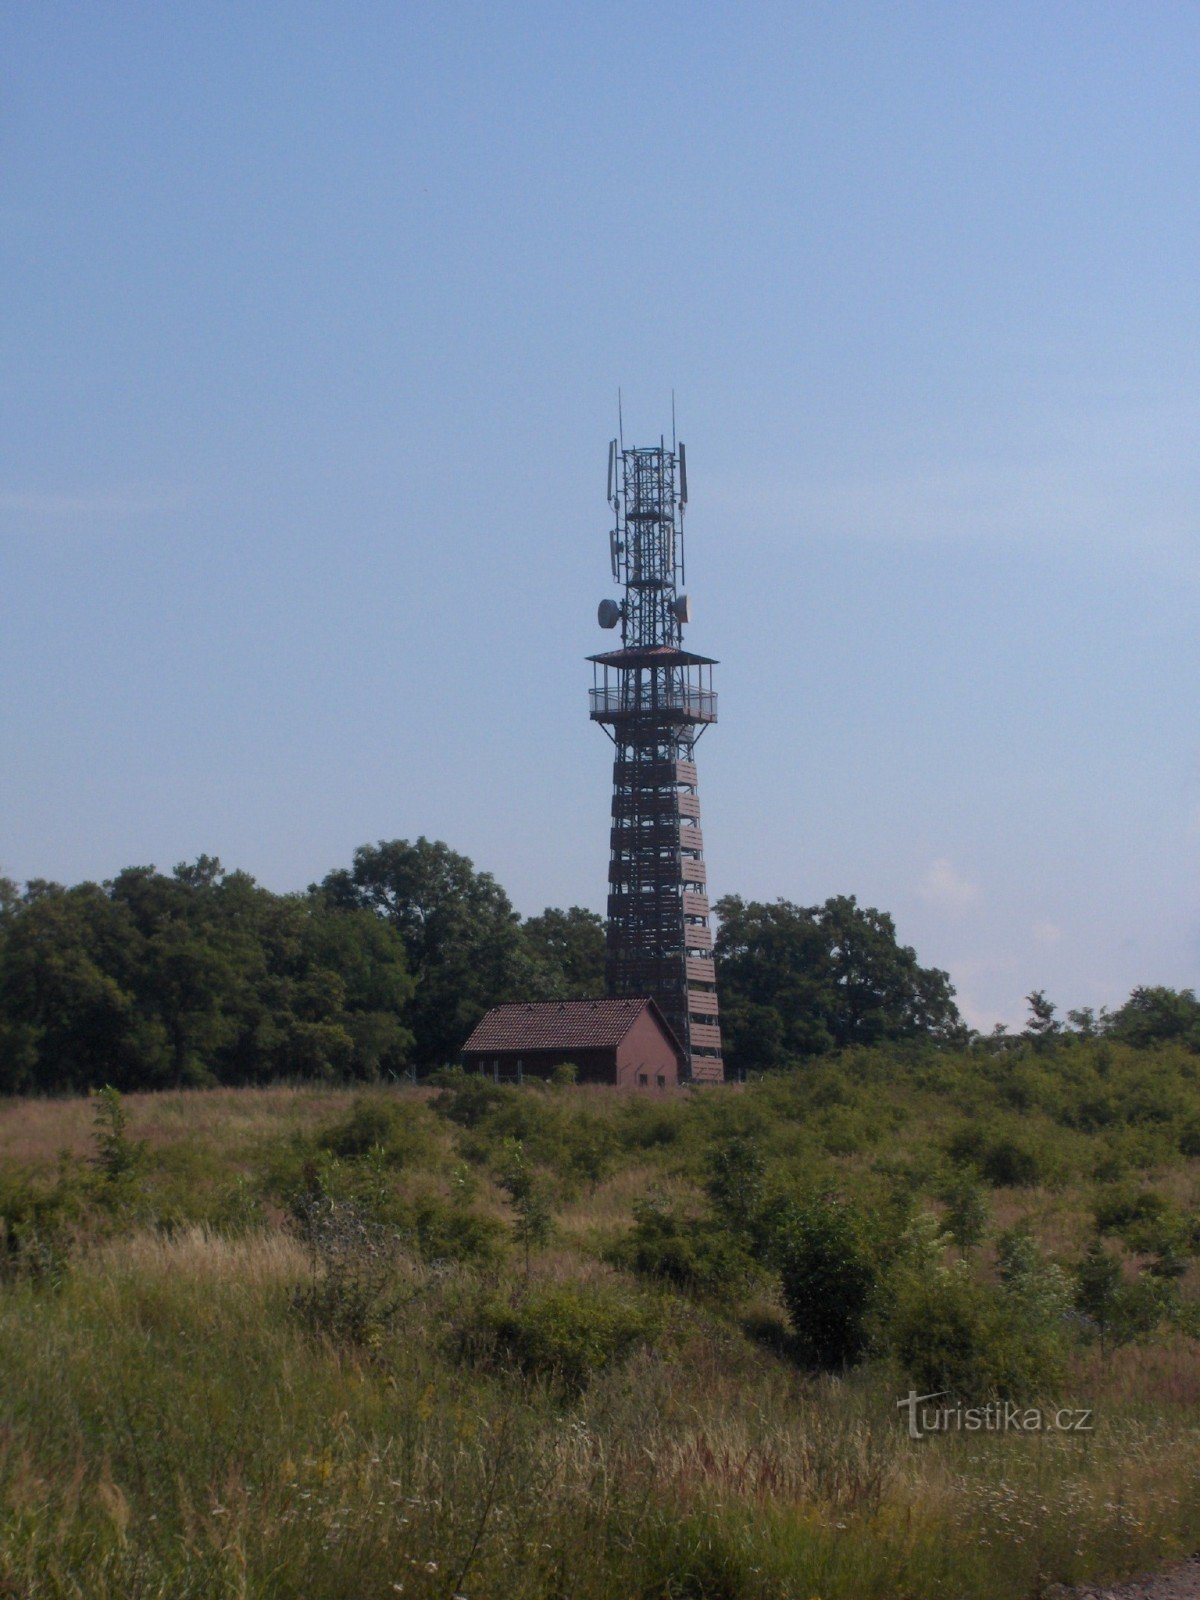 Torre mirador de Radejčín